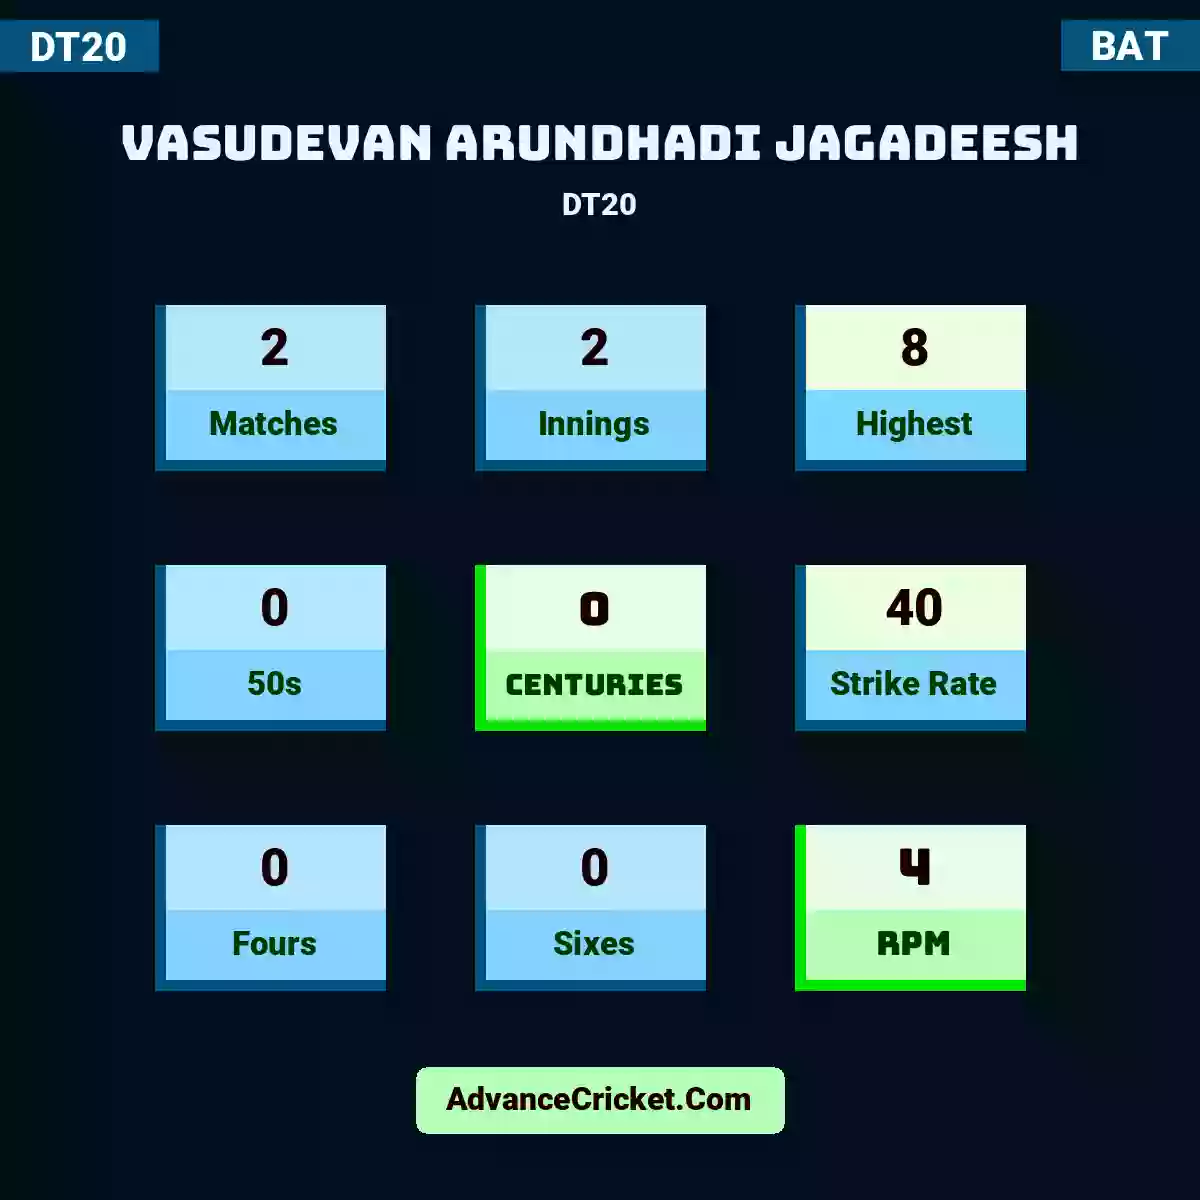 Vasudevan Arundhadi Jagadeesh DT20 , Vasudevan Arundhadi Jagadeesh played 2 matches, scored 8 runs as highest, 0 half-centuries, and 0 centuries, with a strike rate of 40. V.Jagadeesh hit 0 fours and 0 sixes, with an RPM of 4.